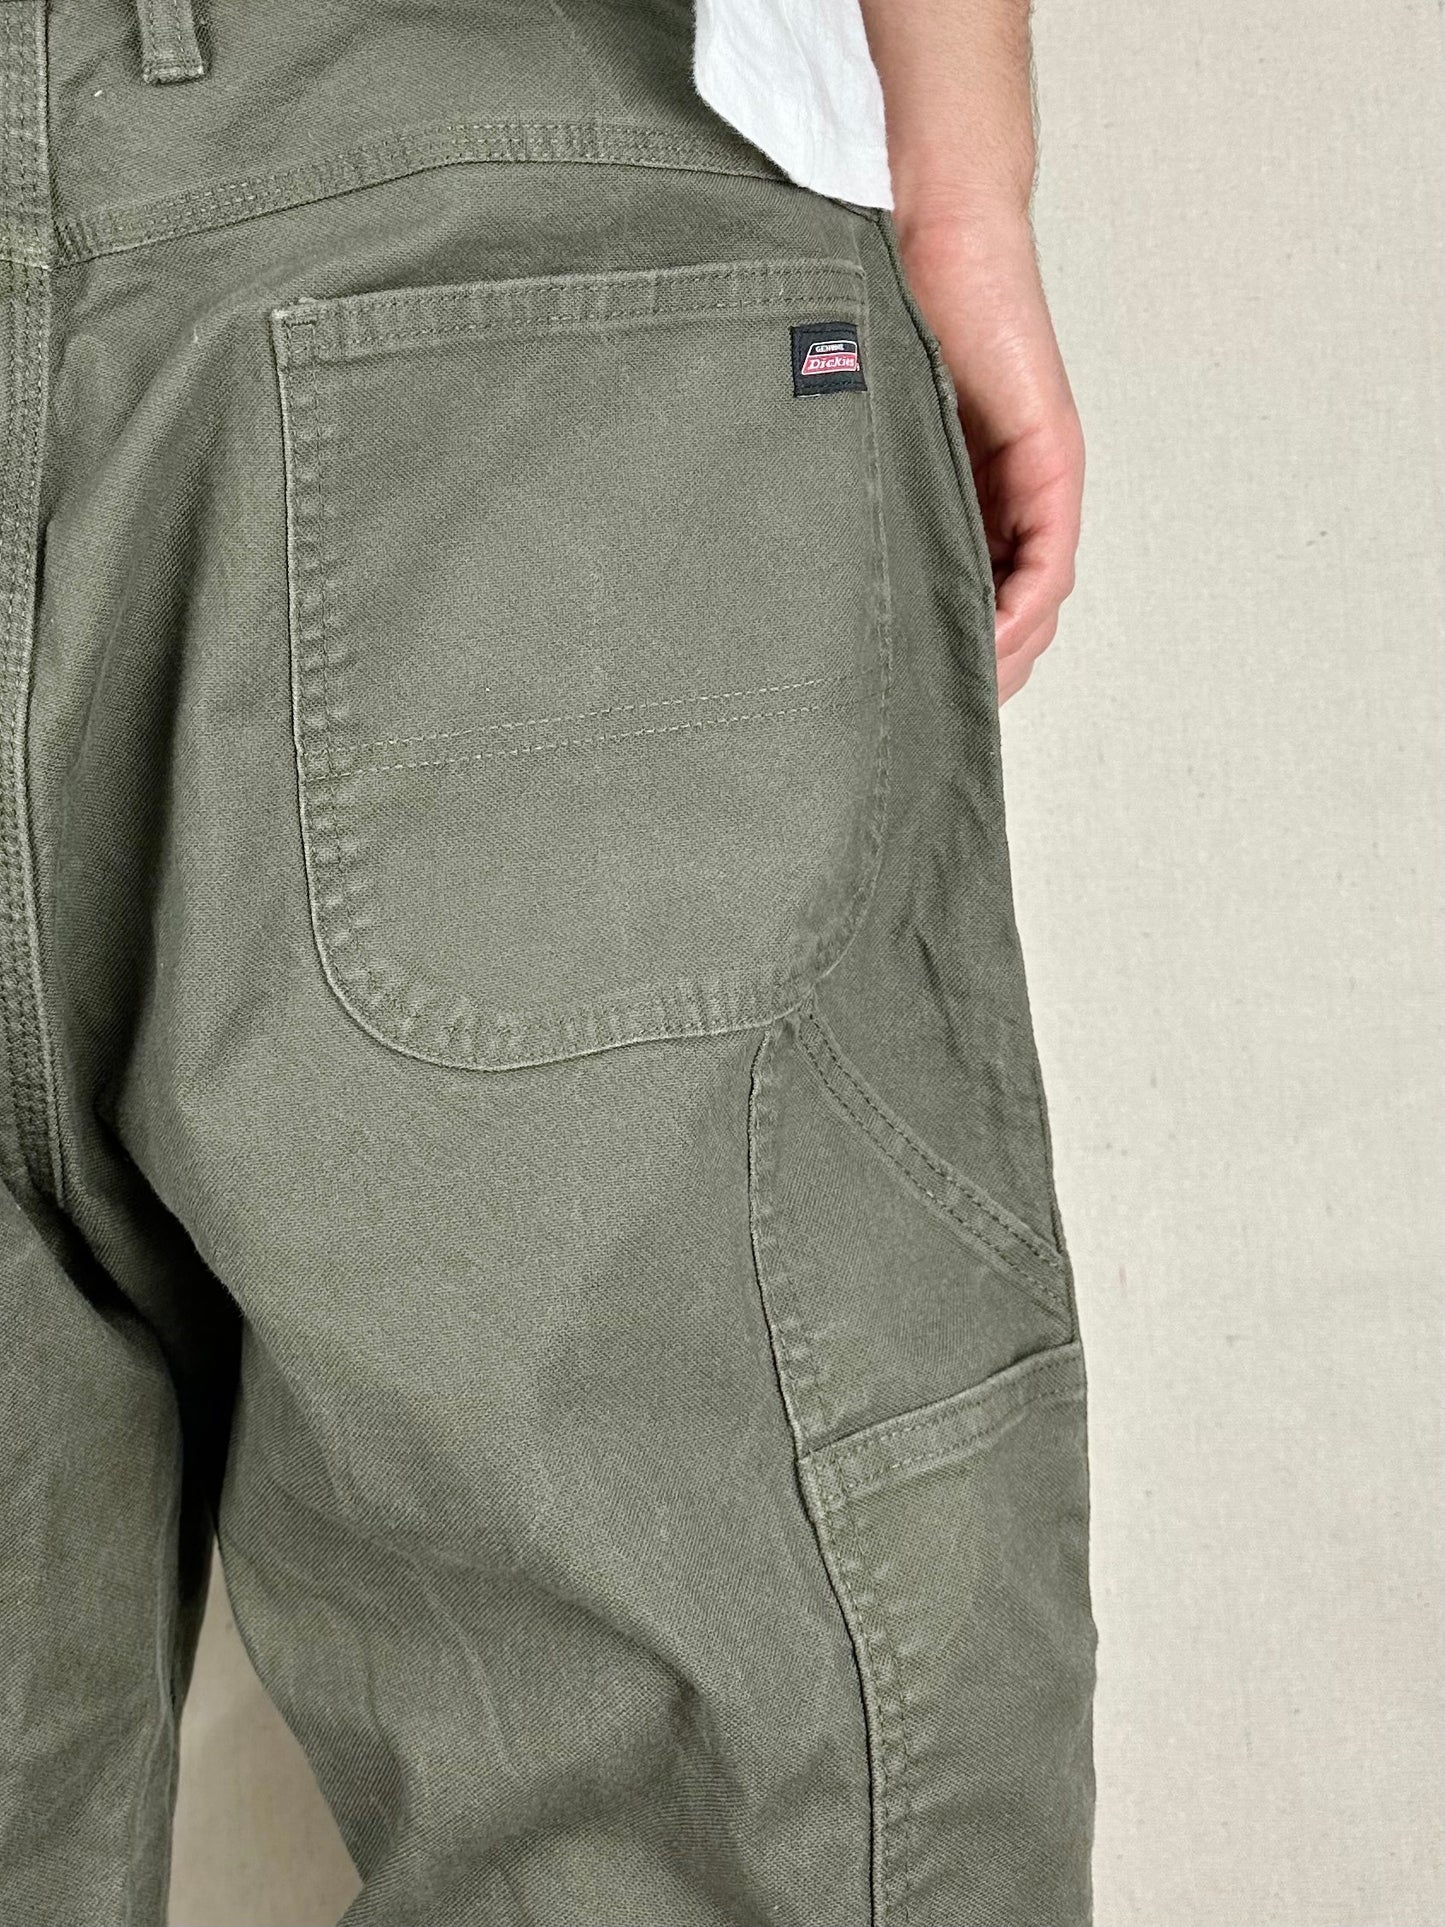 90's Dickies Vintage Carpenter Jeans Size 38x30